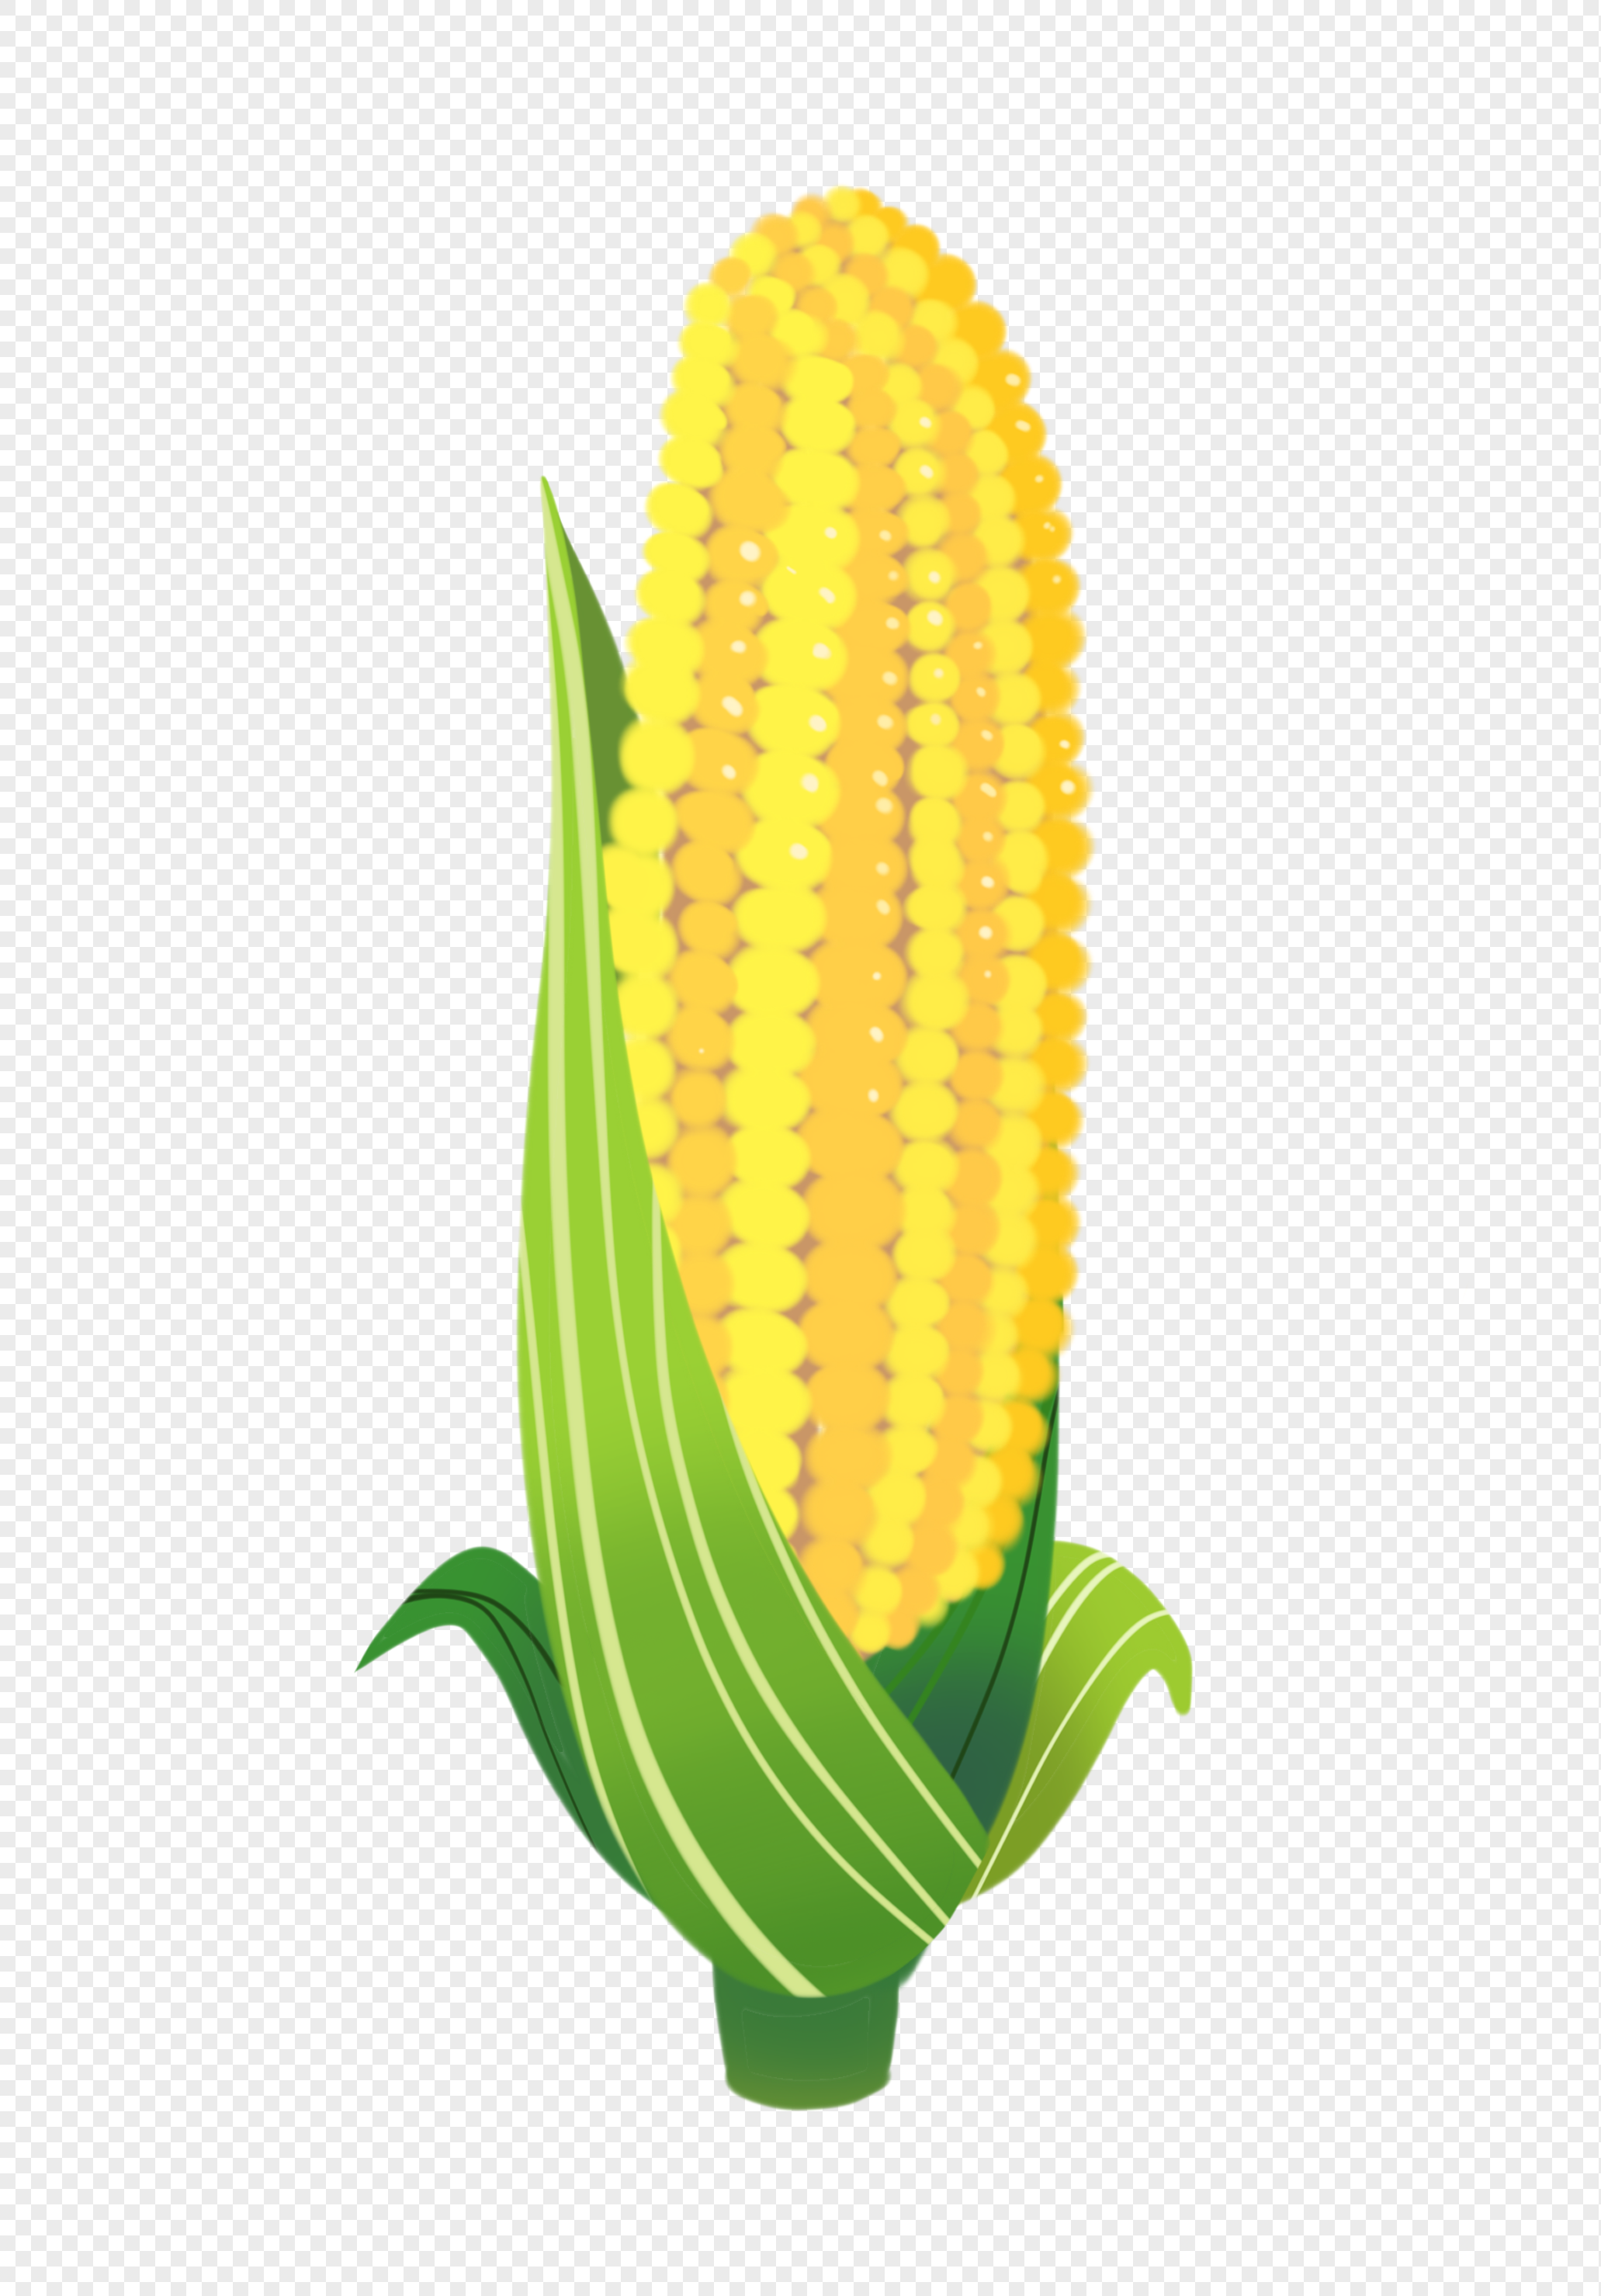 corn cartoon png